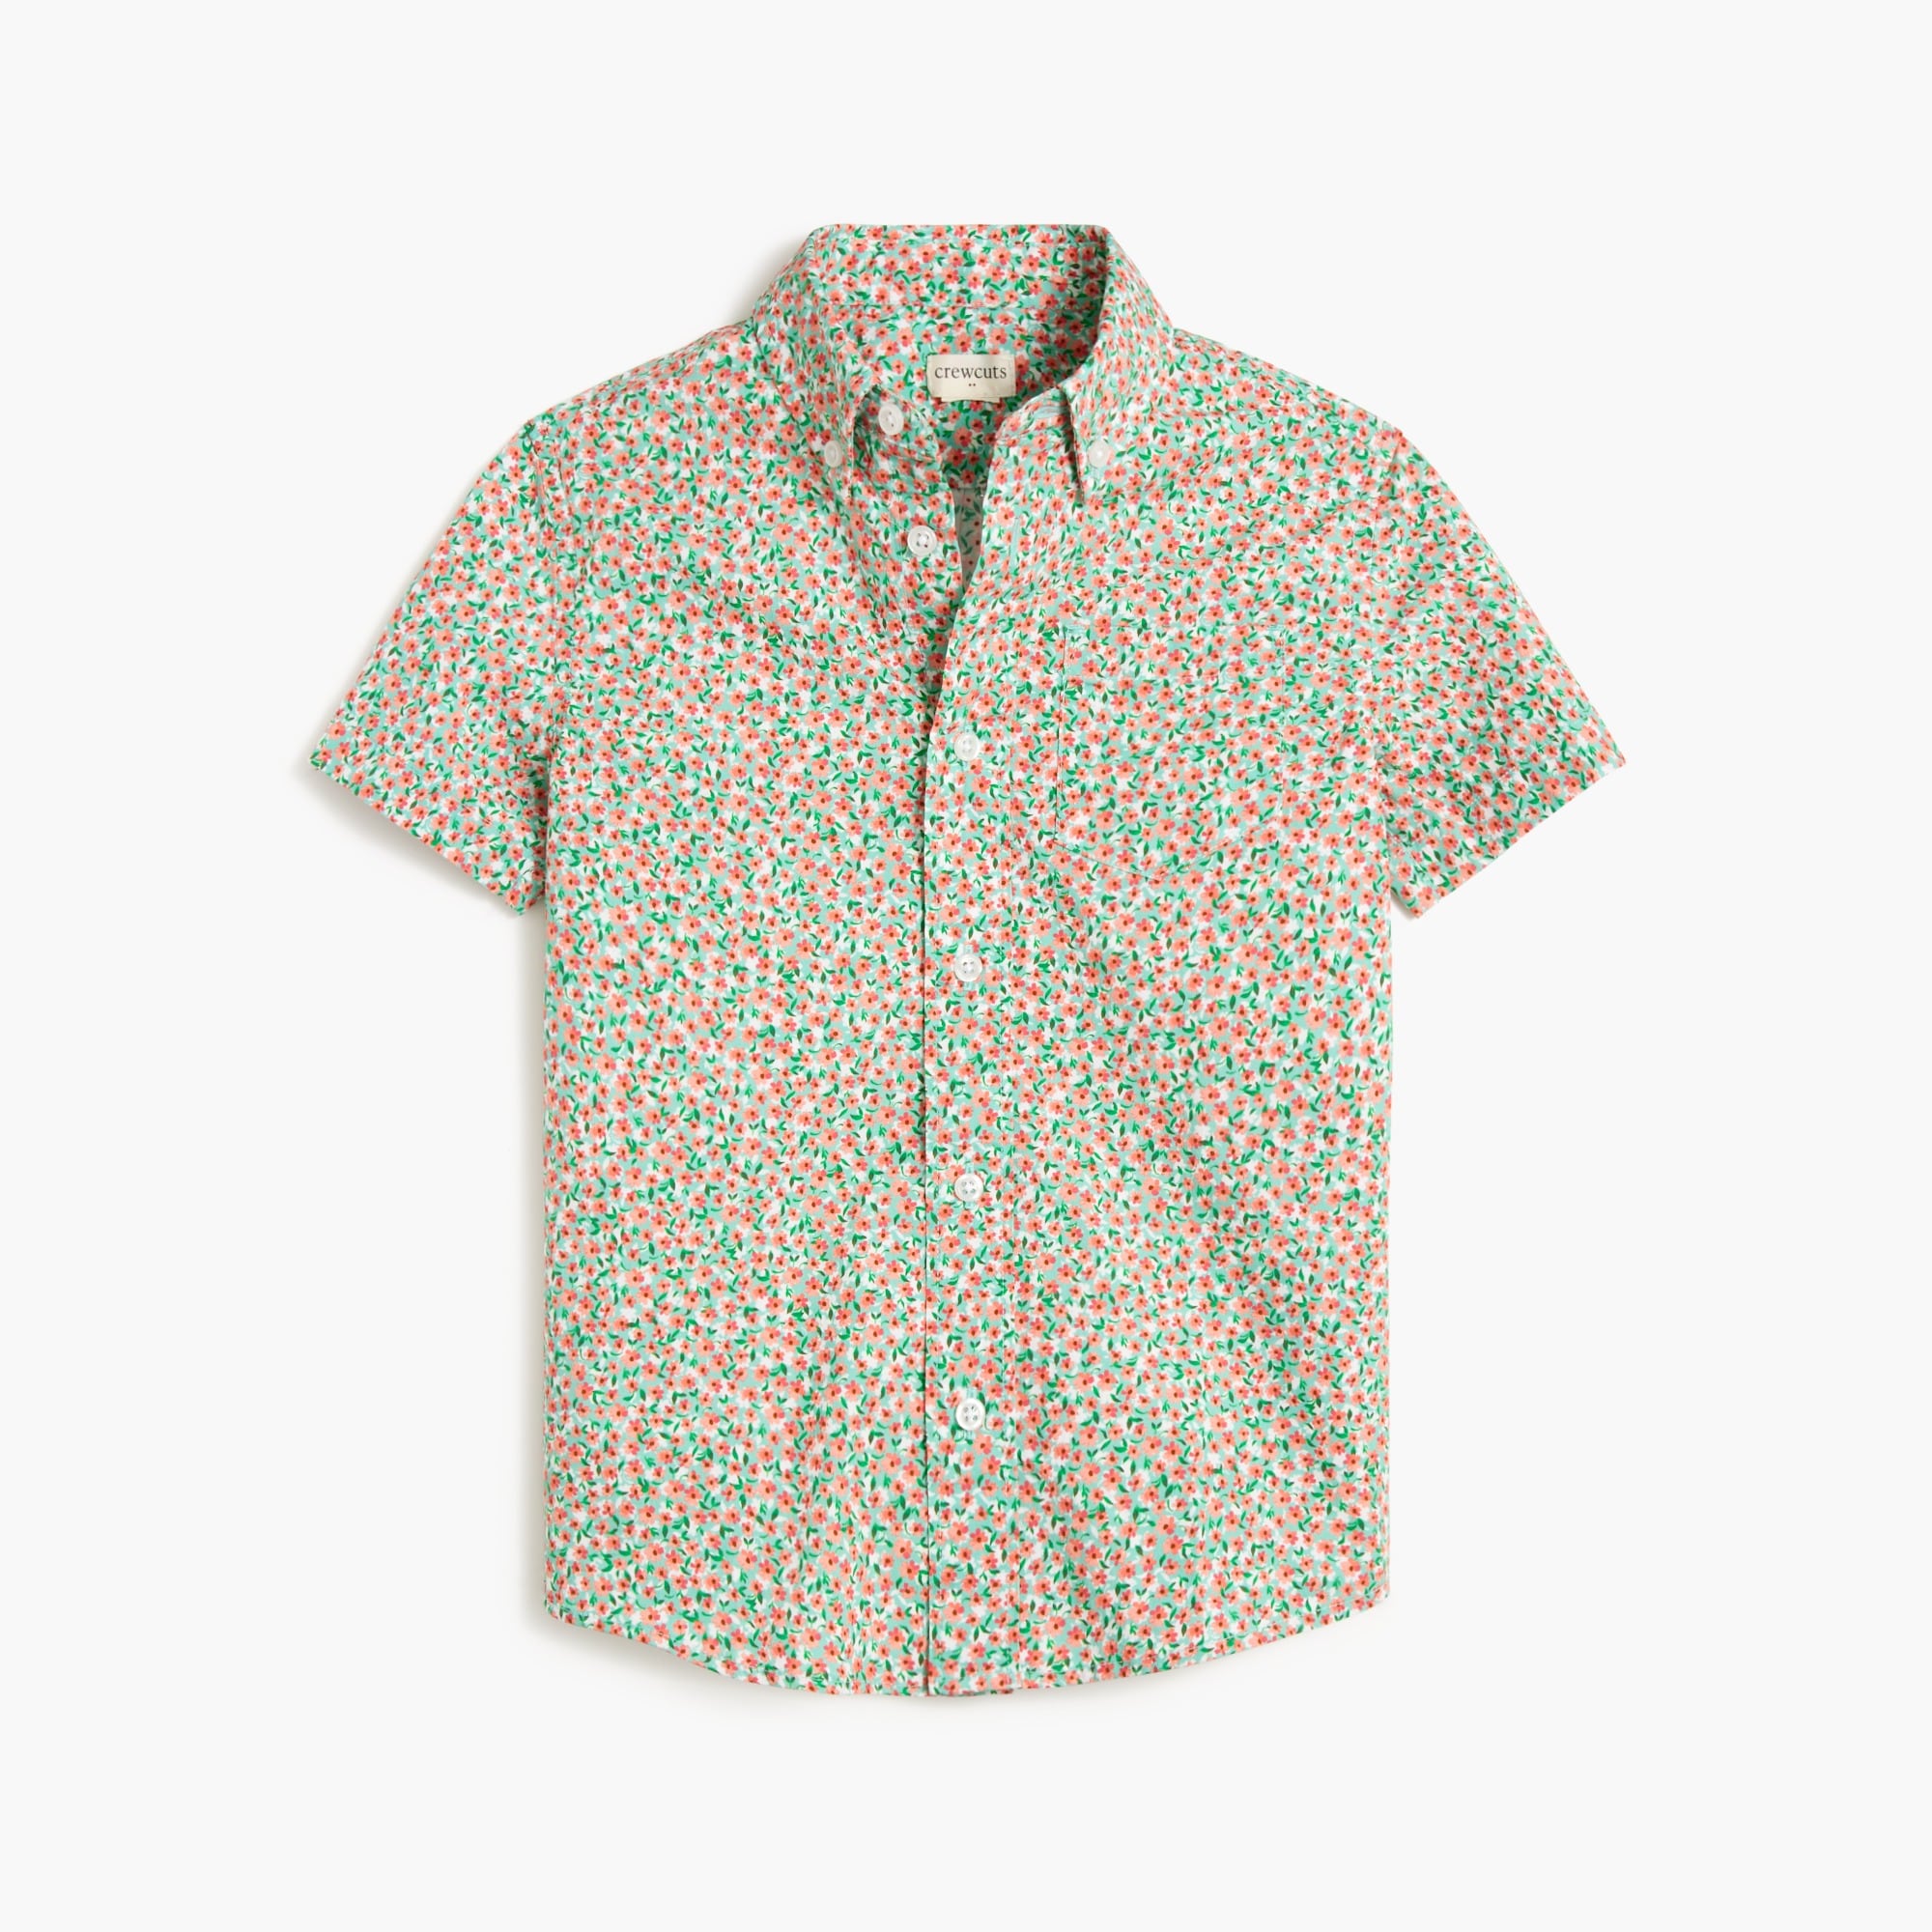  Boys' floral shirt